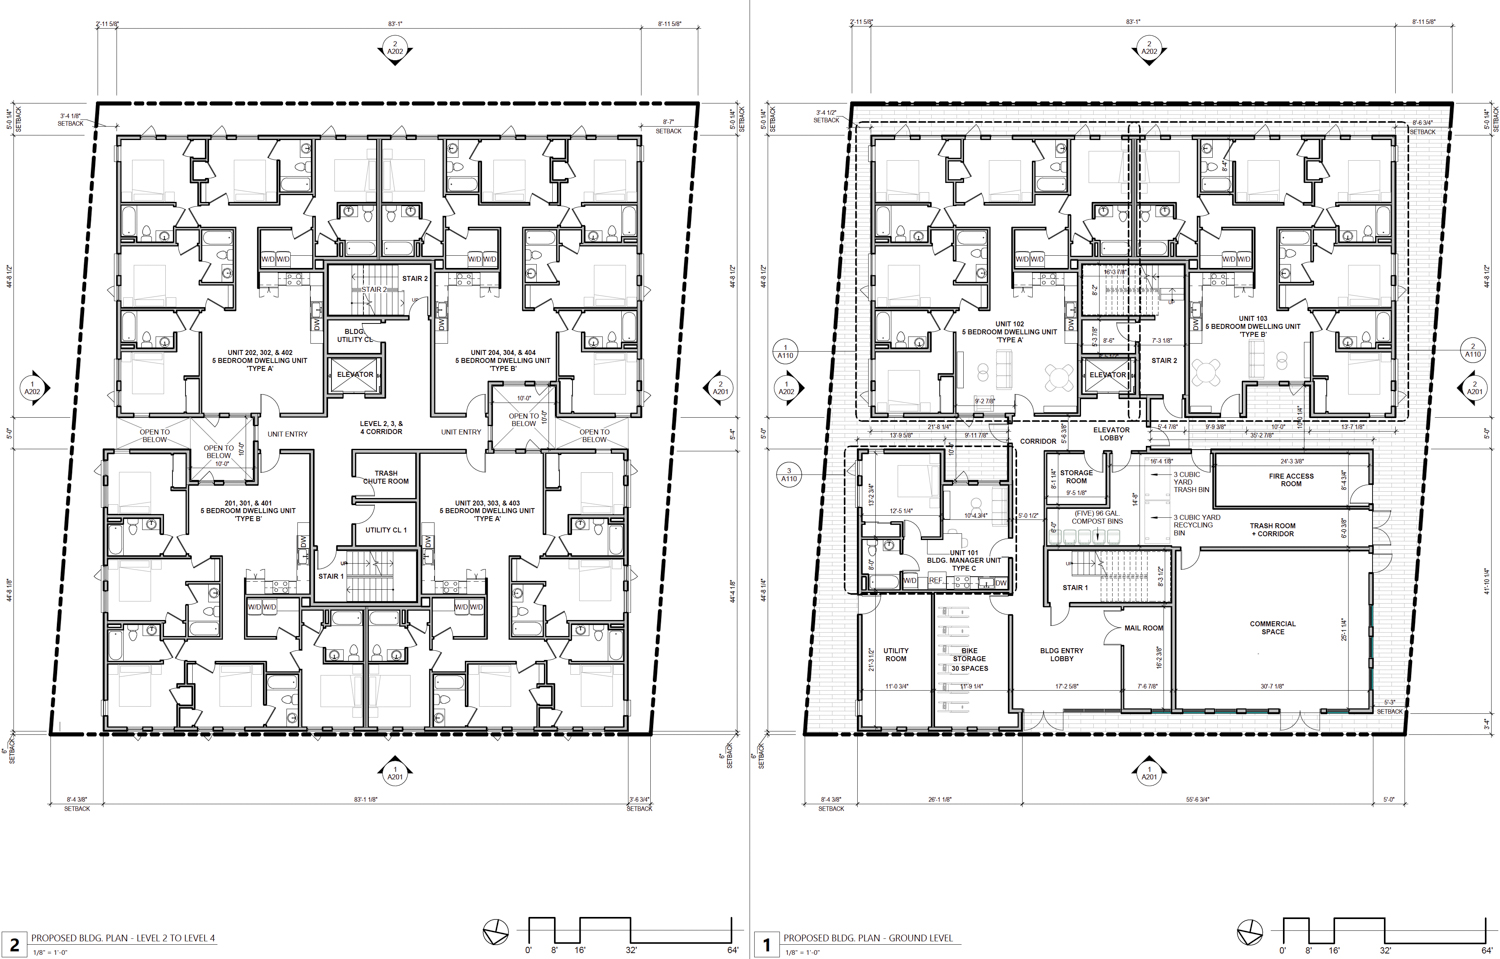 1790 University Avenue floor plans, rendering by Baran Studio Architecture